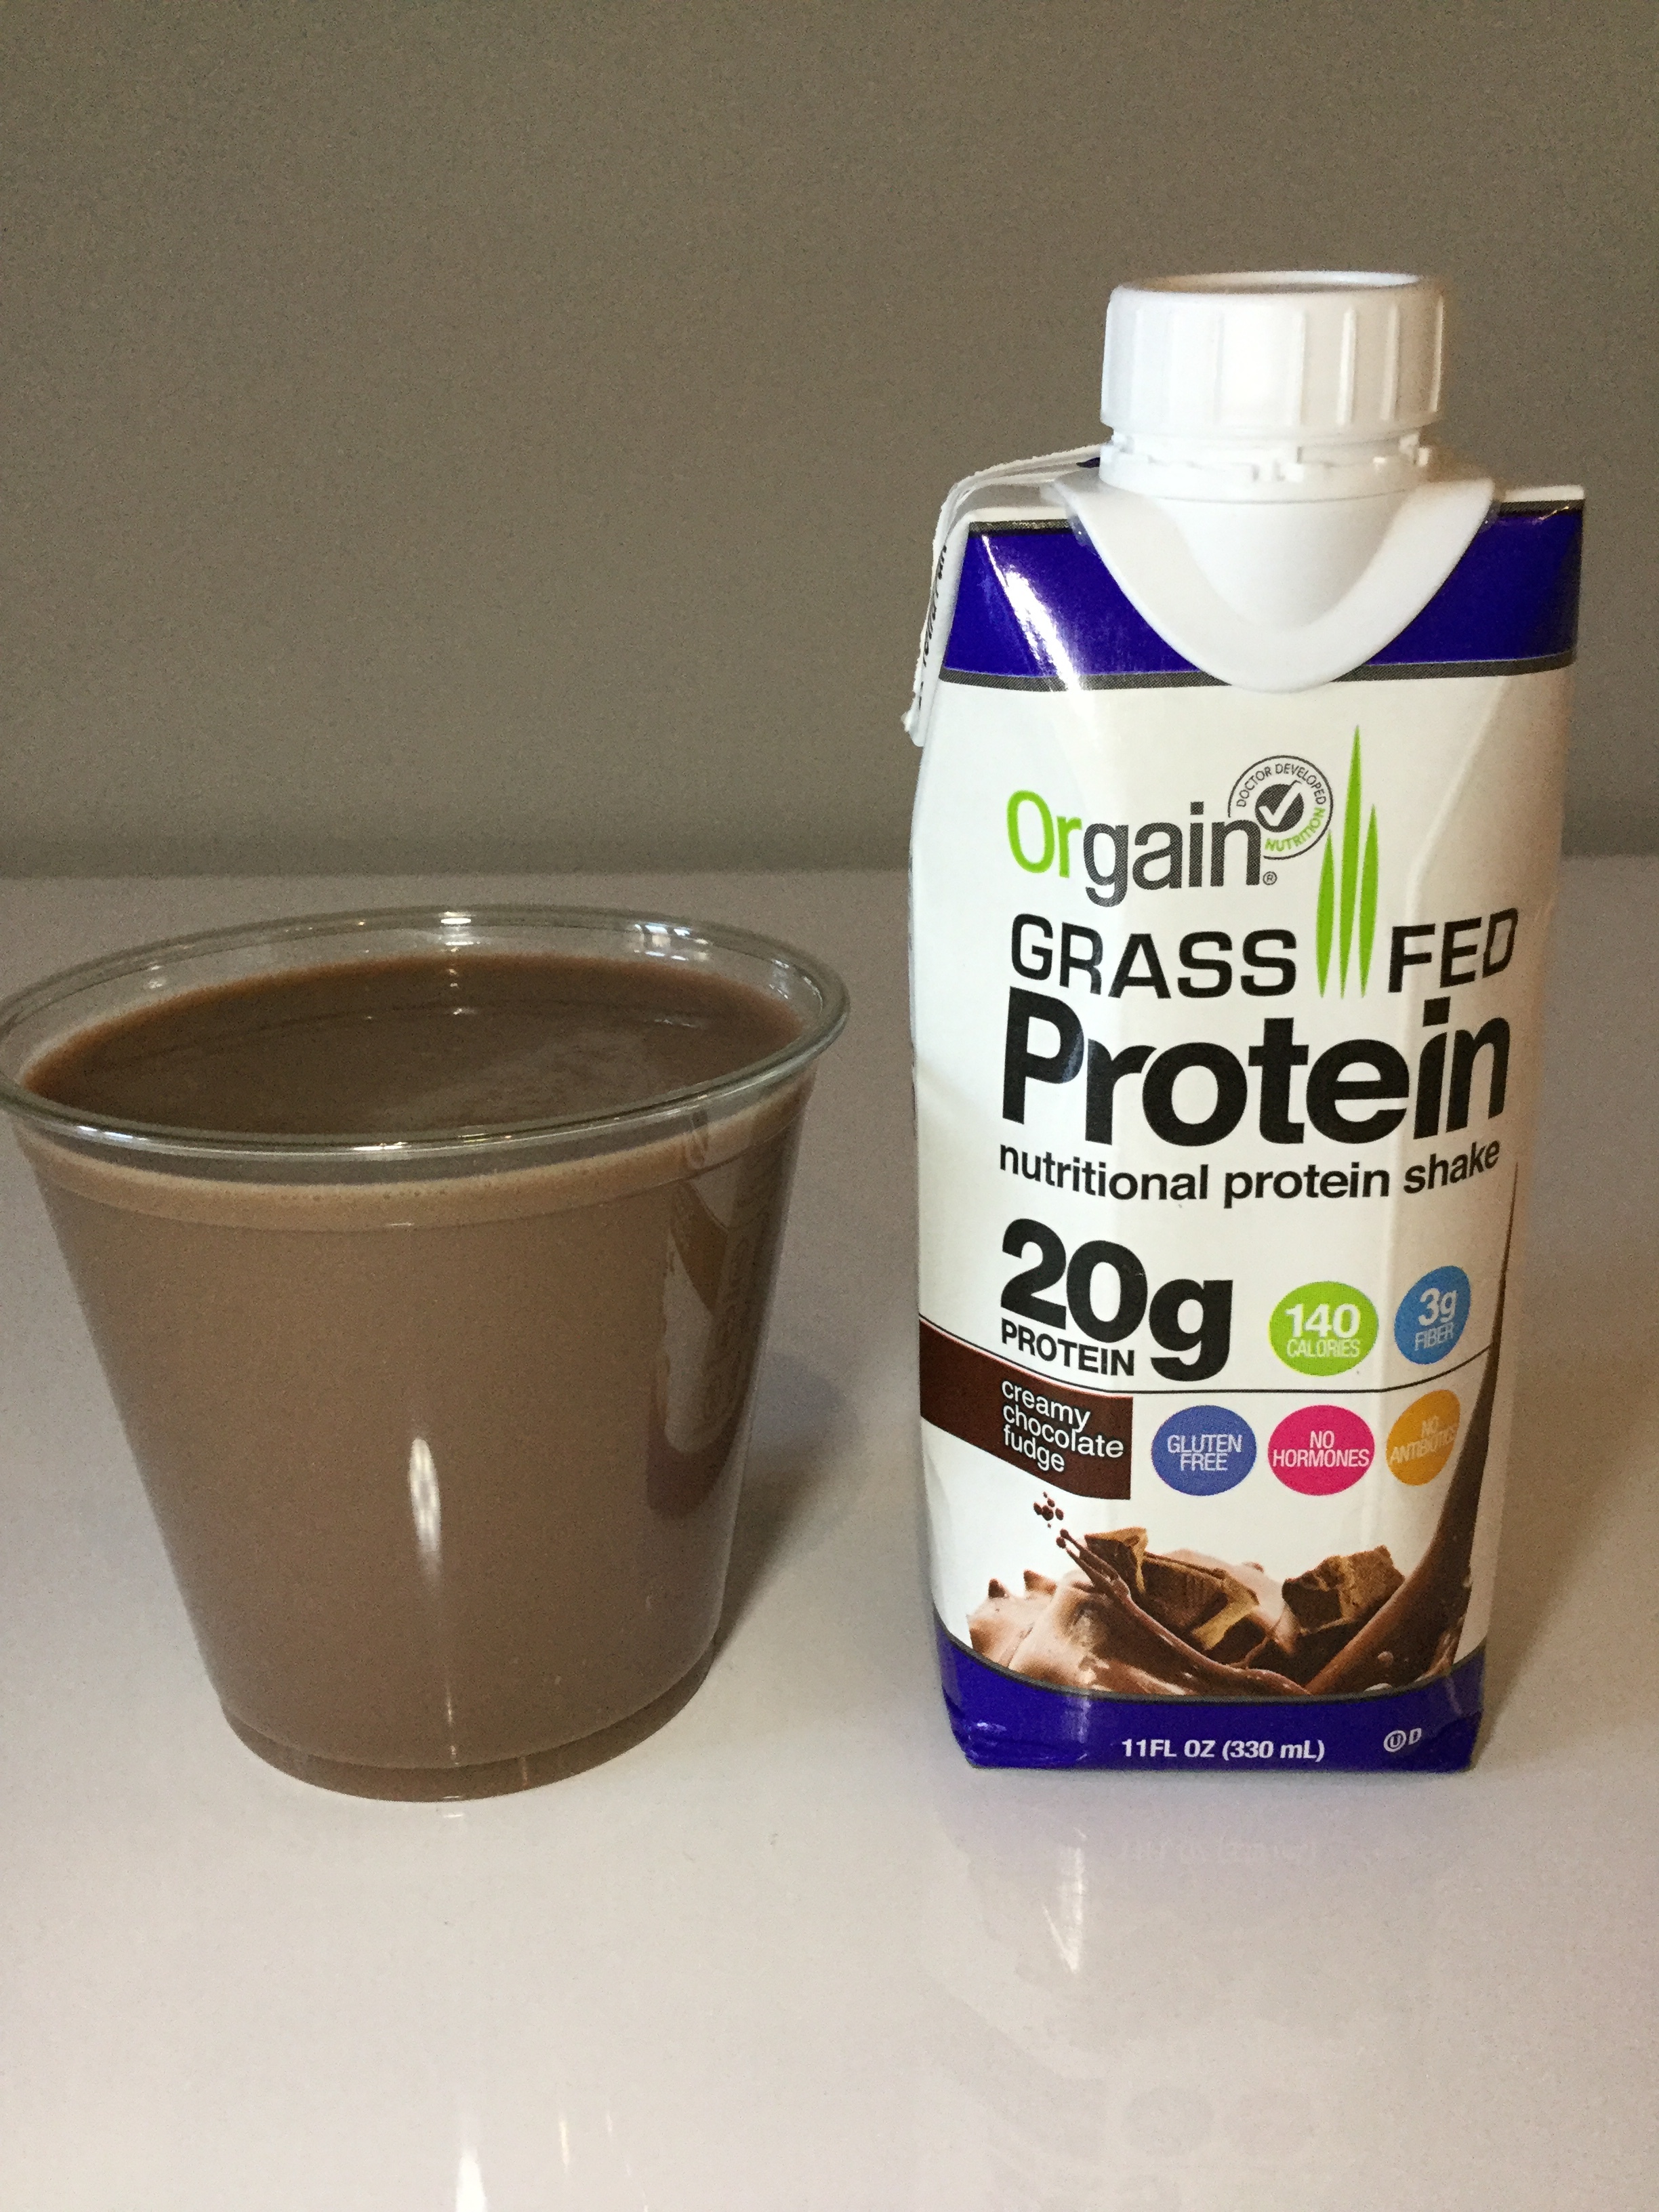 Orgain Grass Fed Clean Protein Shake, Creamy Chocolate Fudge